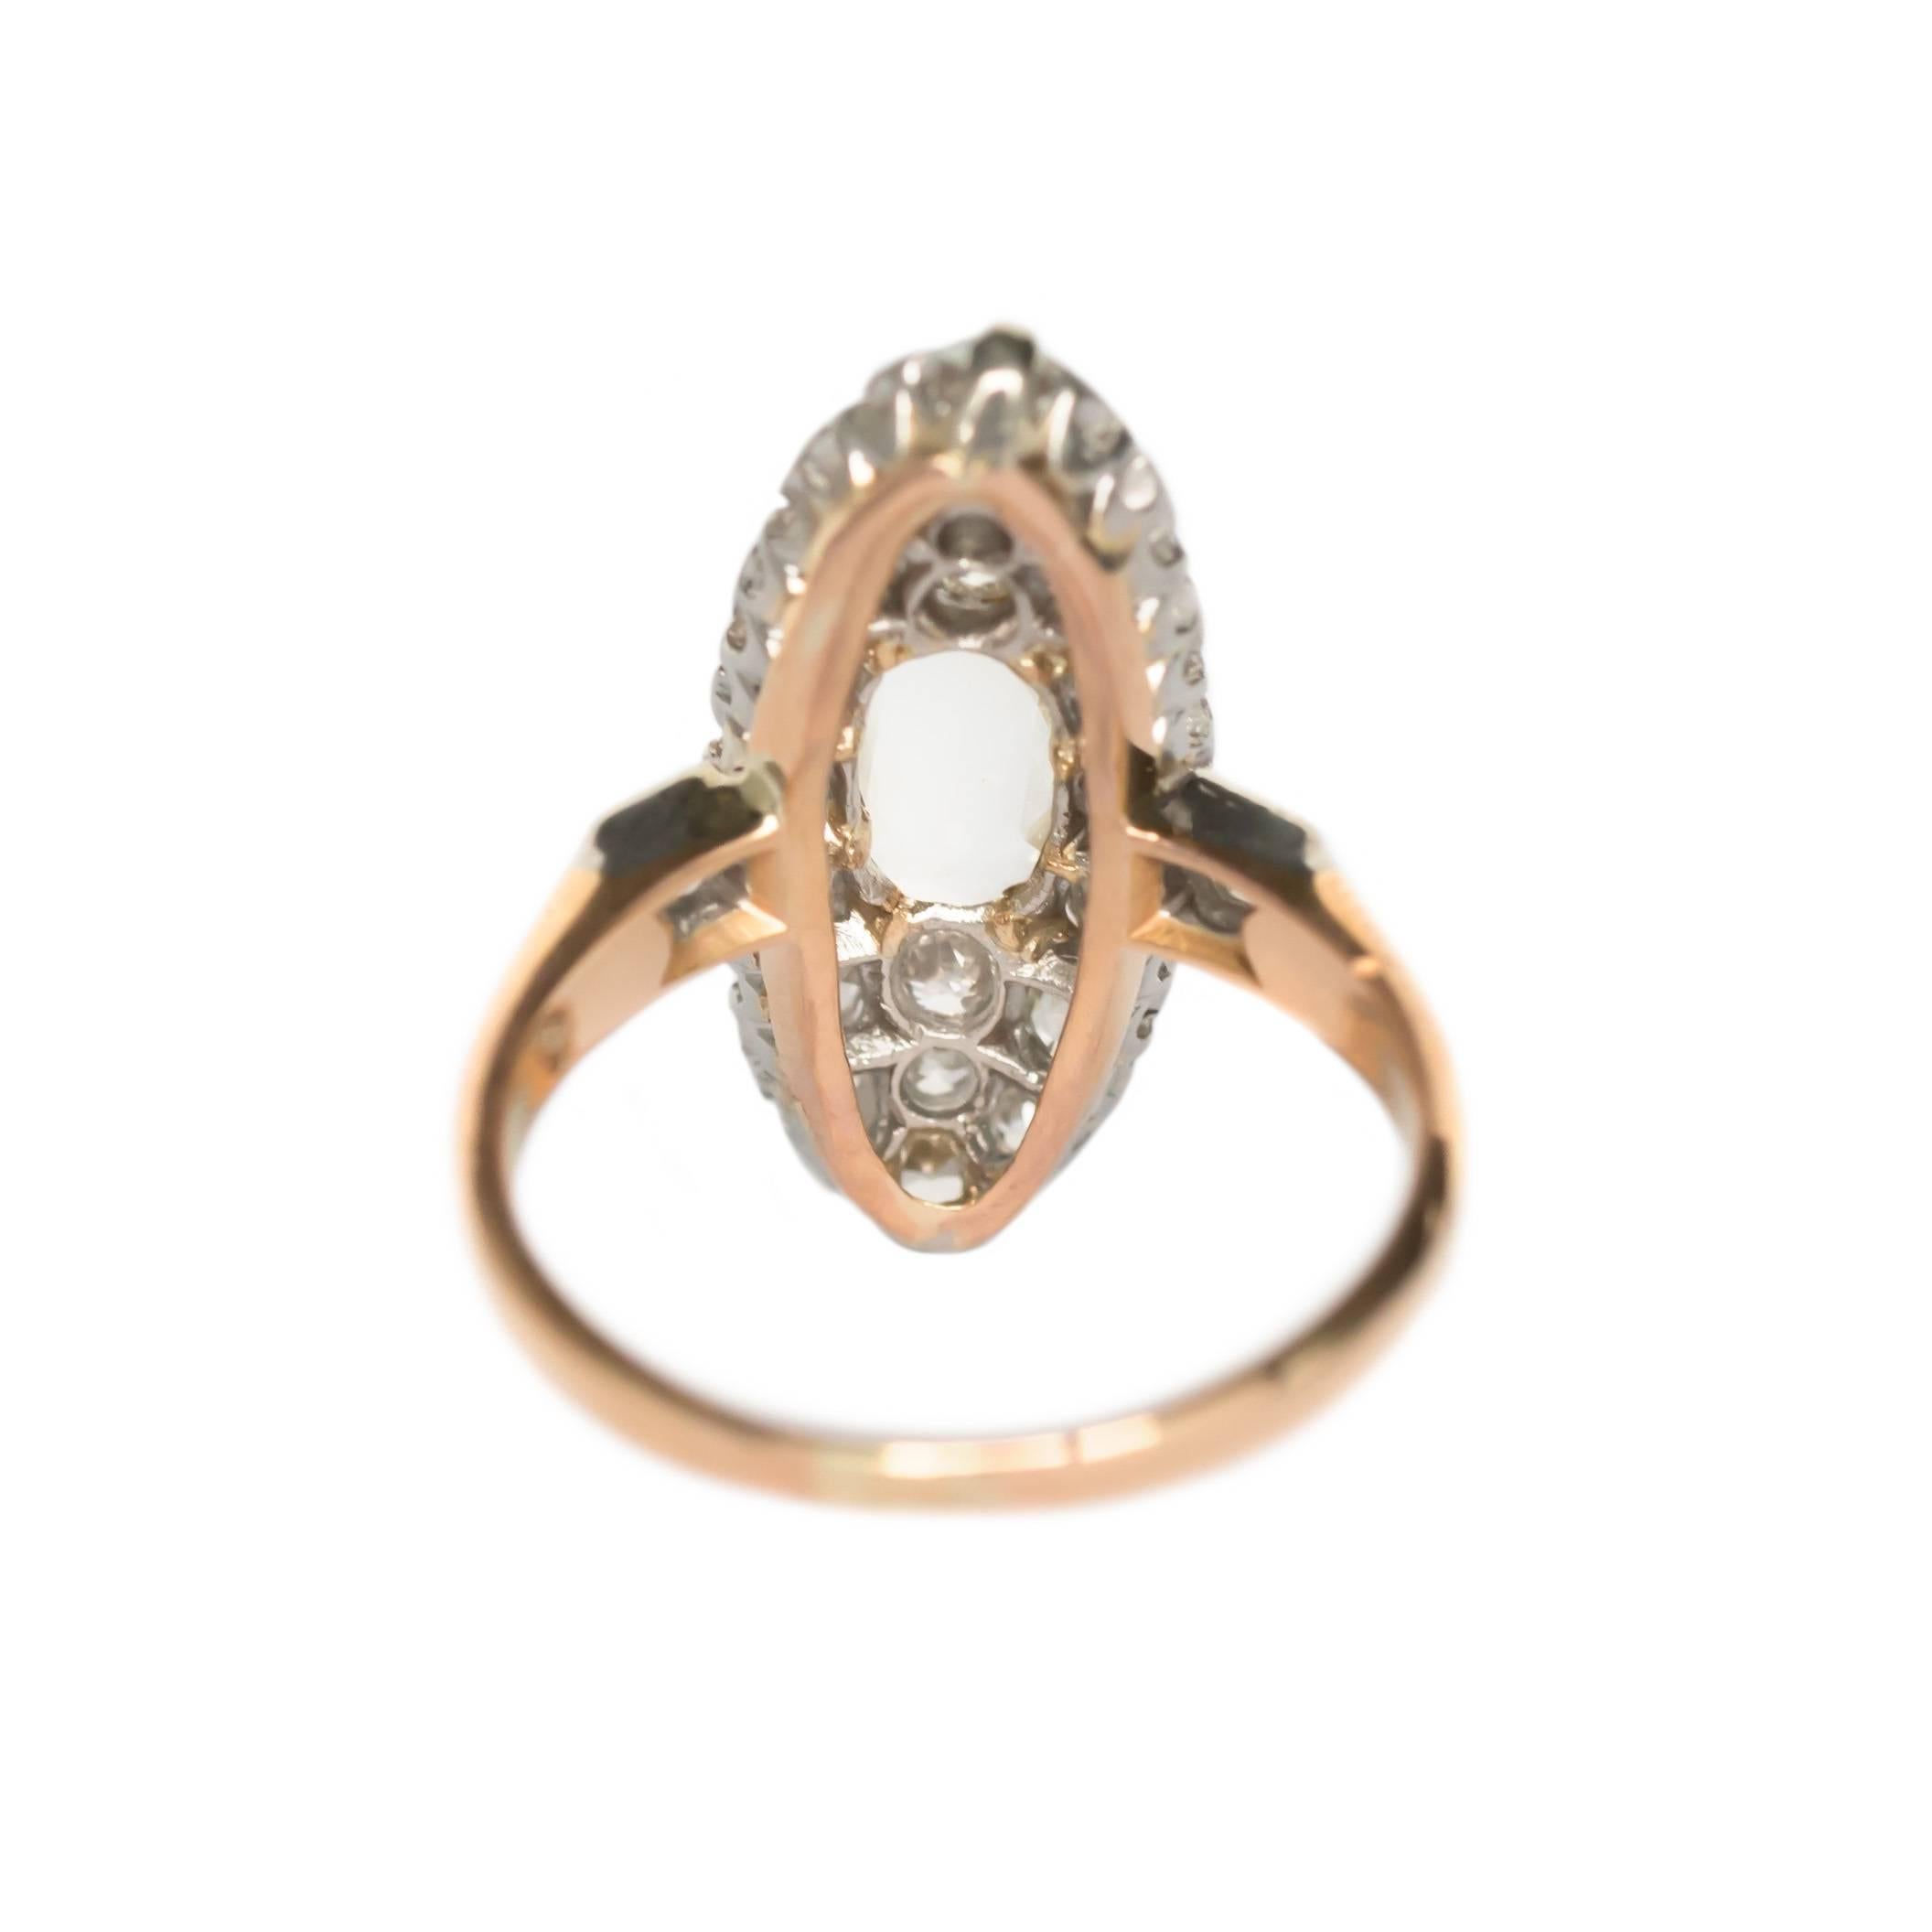 45 carat diamond ring